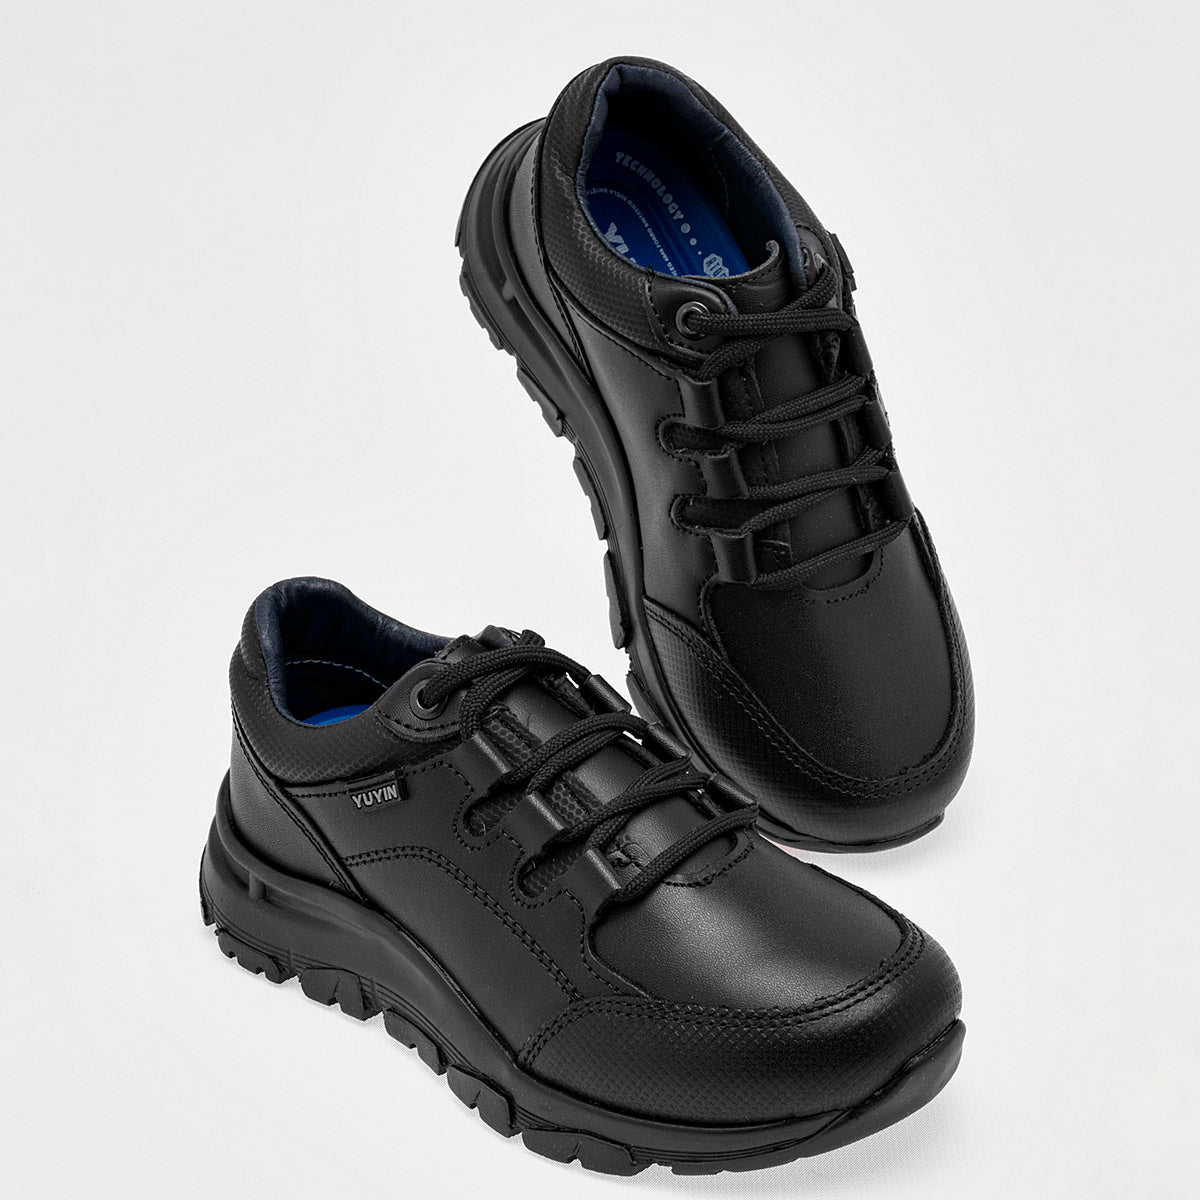 Pakar.com - Mayo: Regalos para mamá | Zapato casual para niño cod-111338